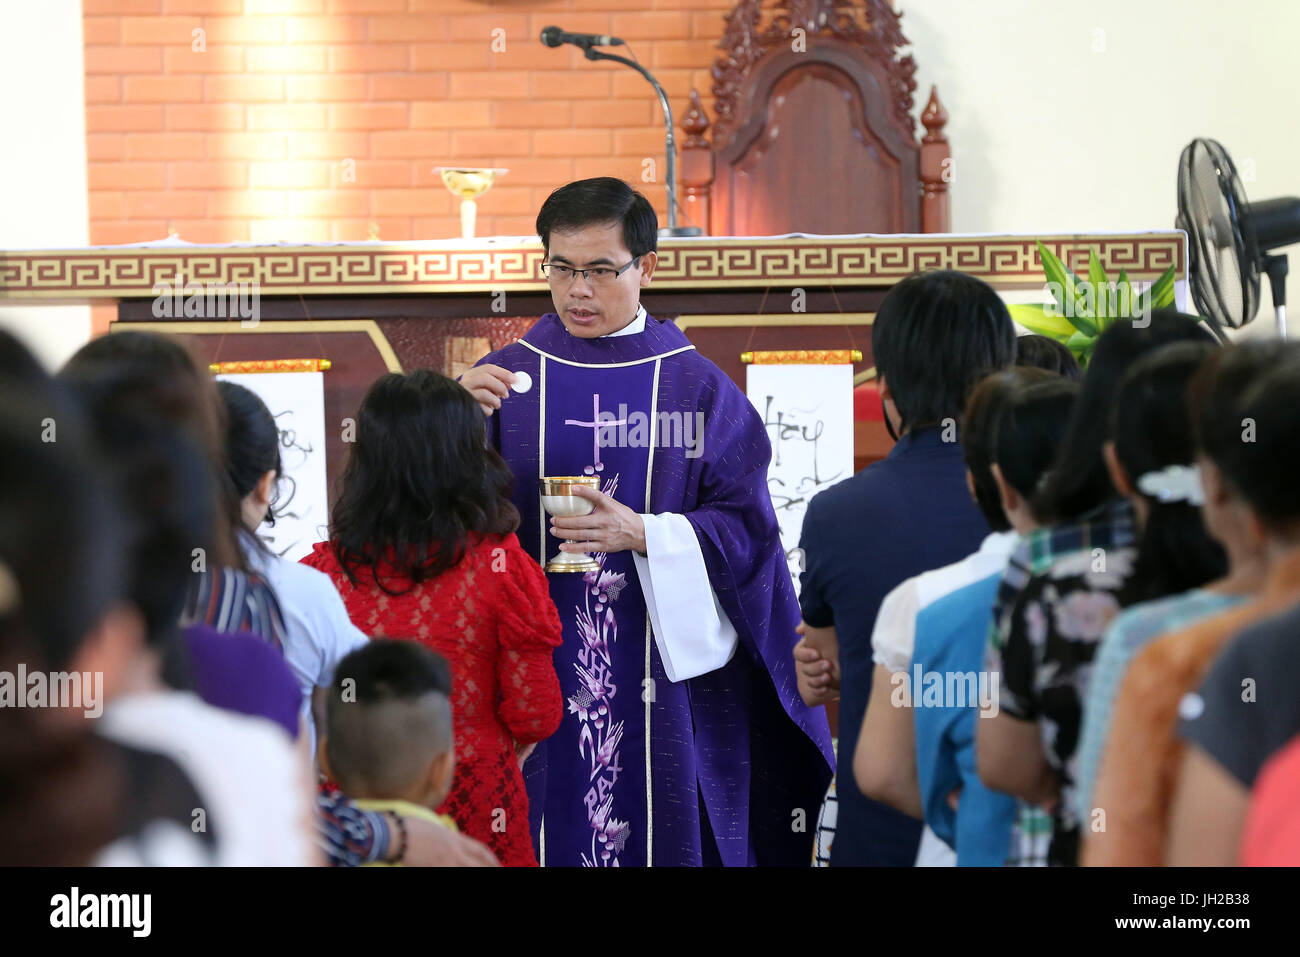 Franciscan missionaries of Mary church.   Sunday morning mass.  Holy communion.  Ho chi Minh City. Vietnam. Stock Photo